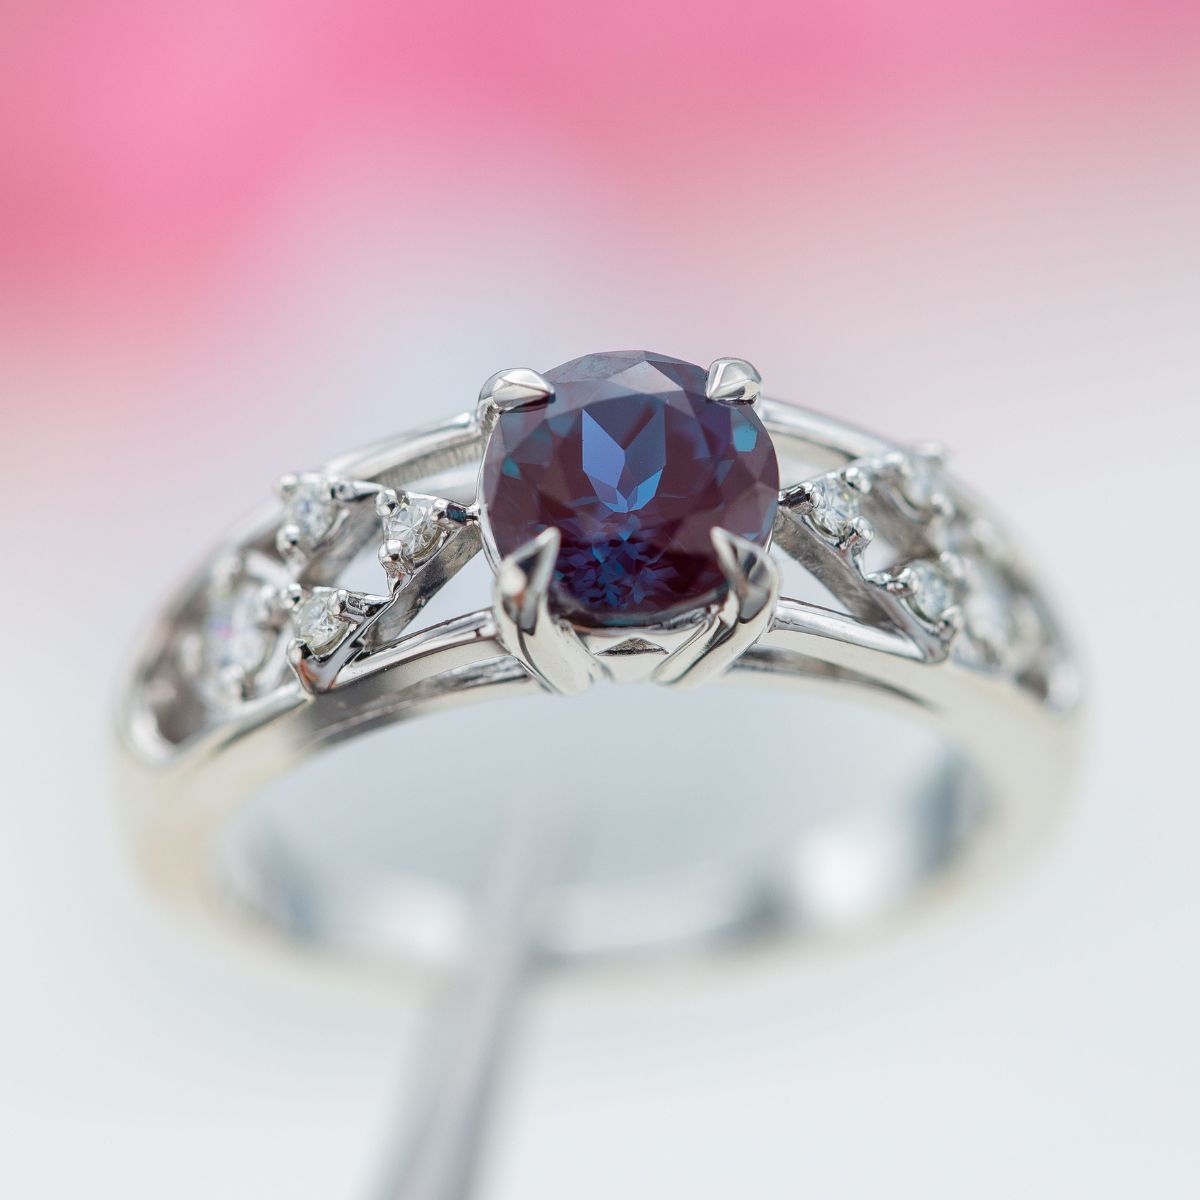 Zelda inspired engagement ring designs | CustomMade.com